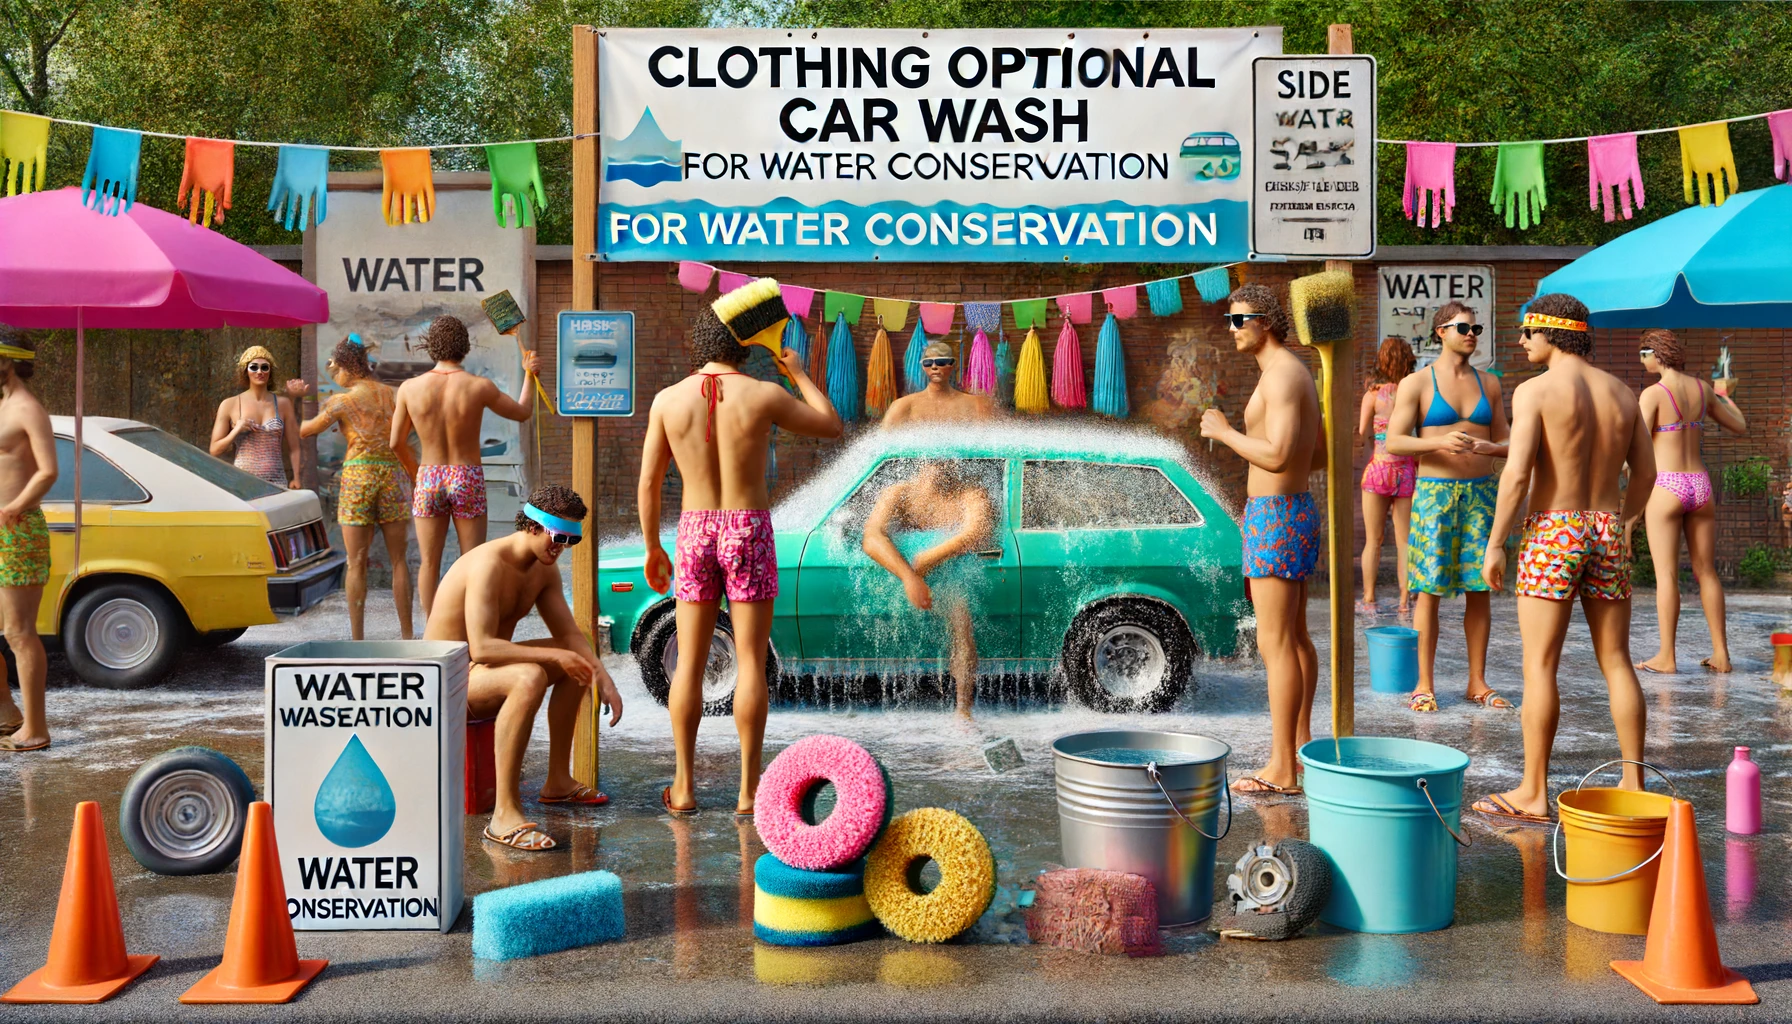 People washing cars at a clothing-optional car wash